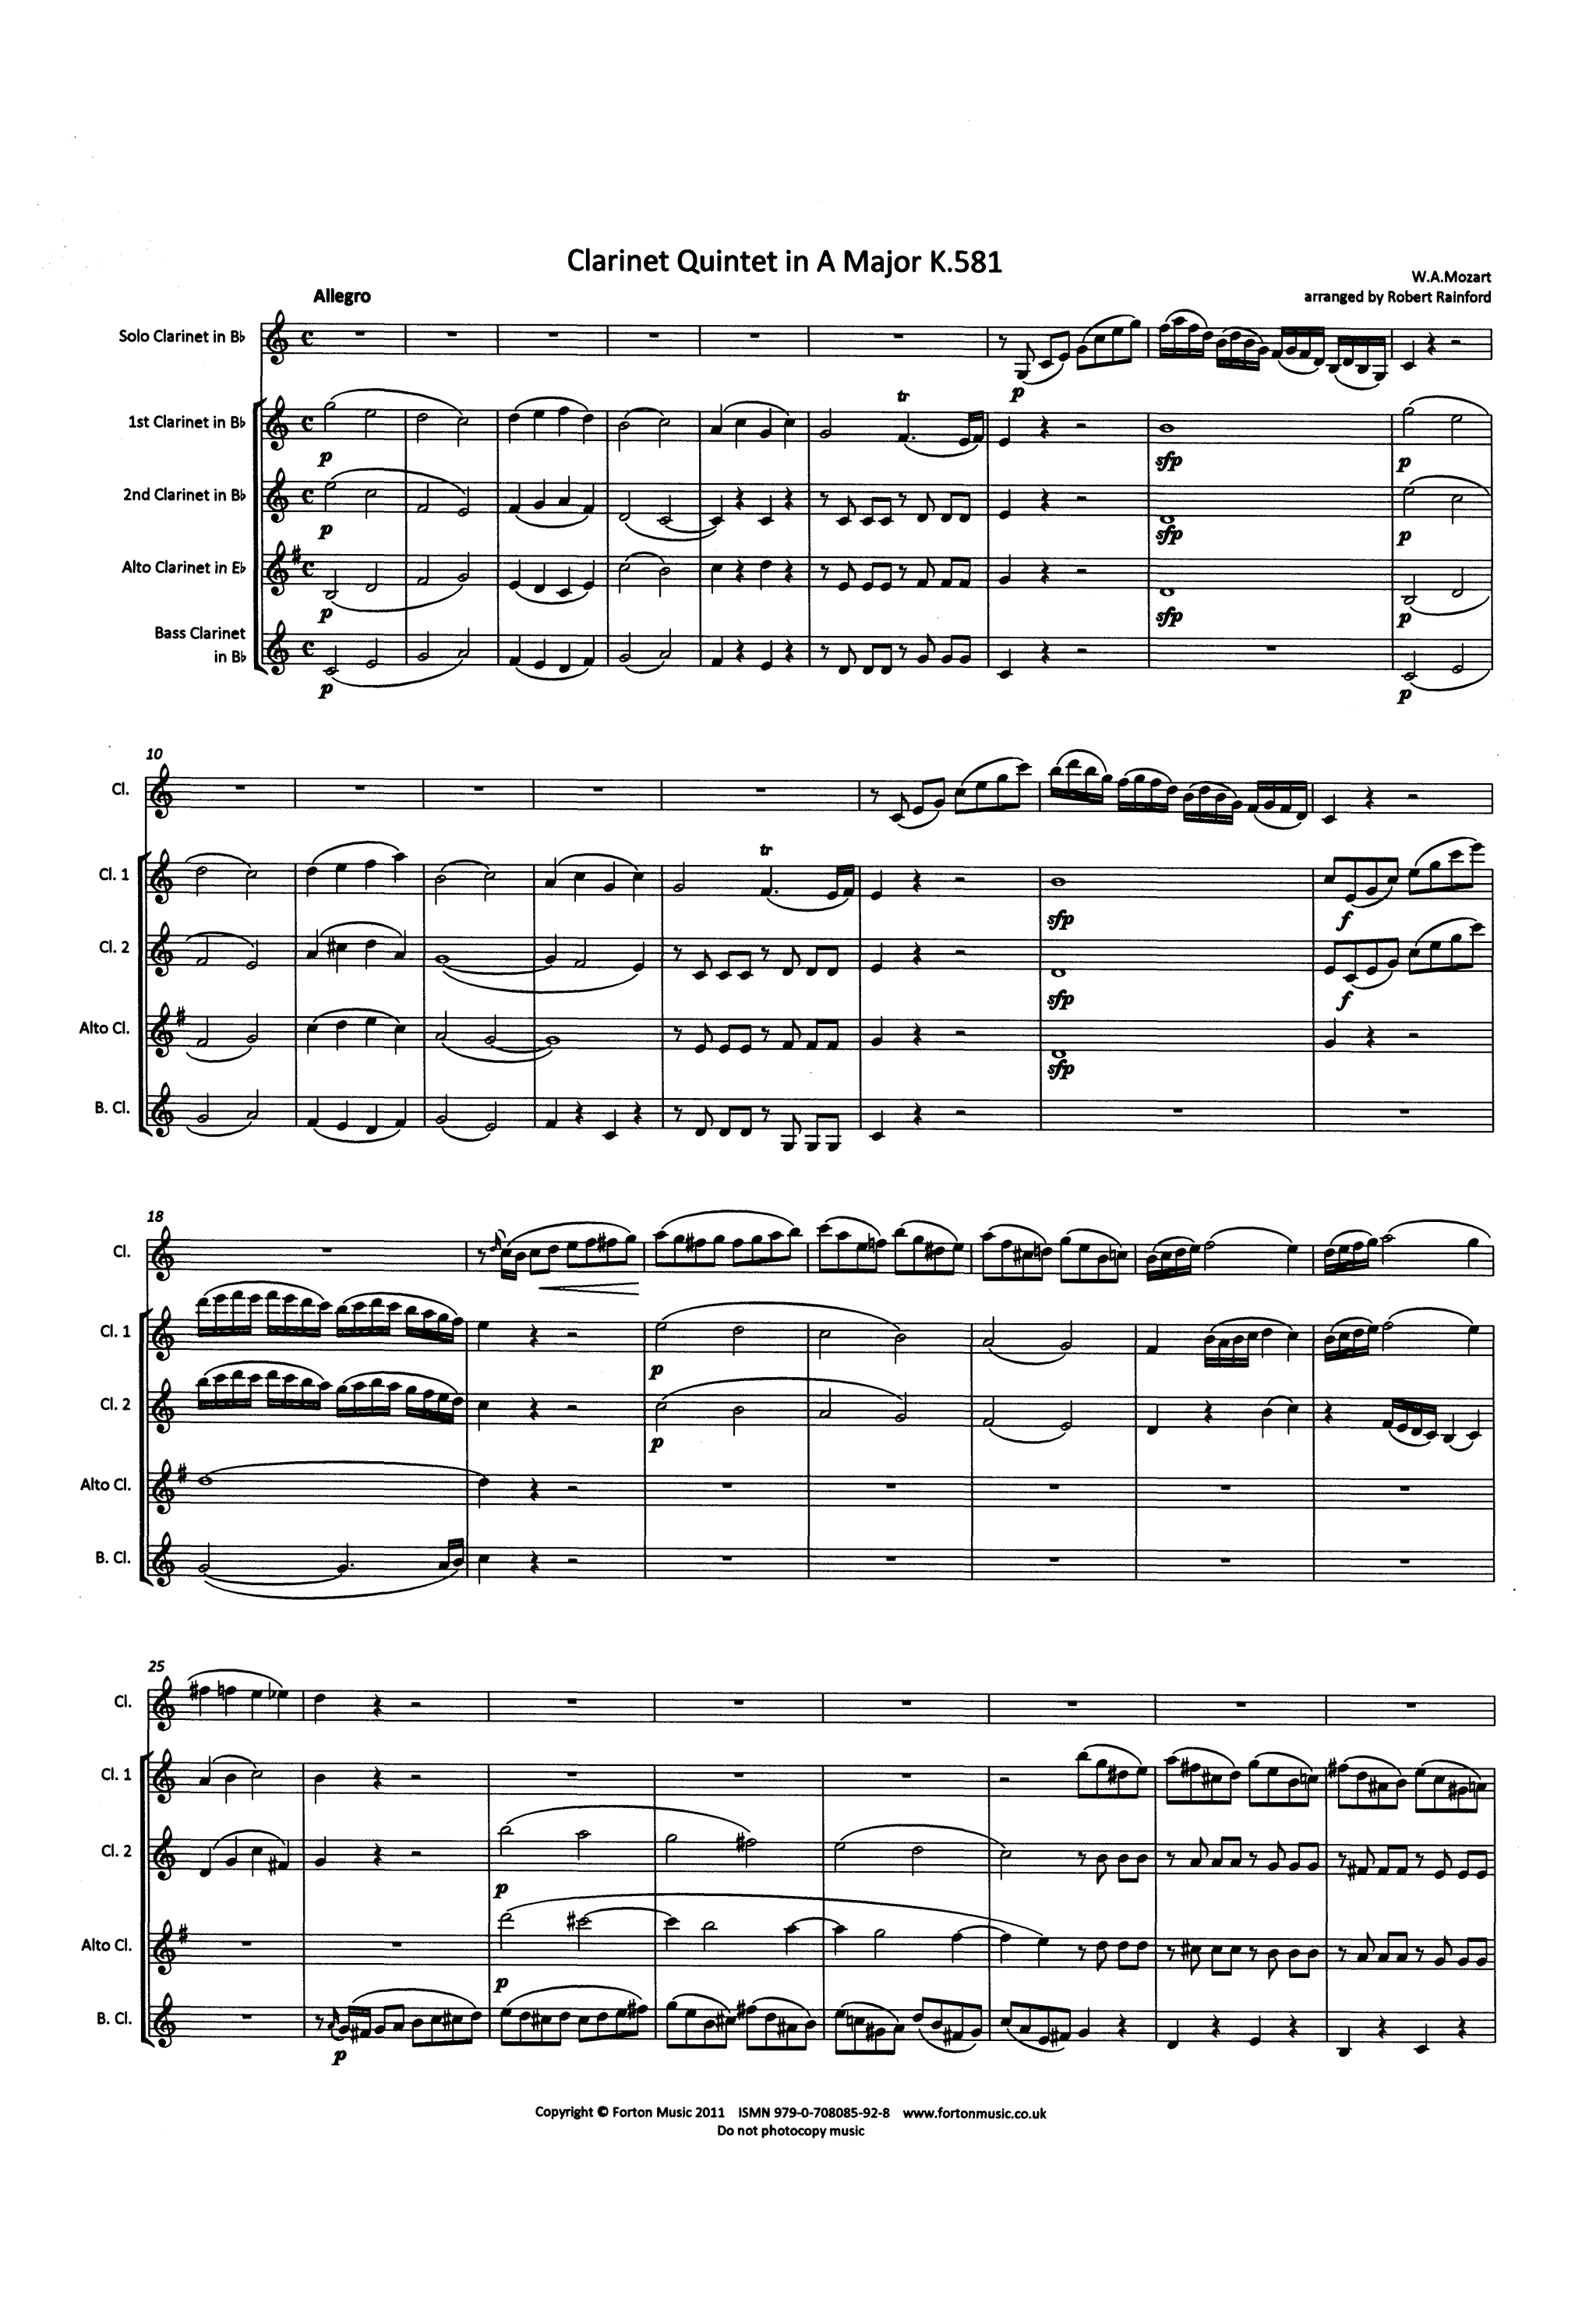 Clarinet Quintet, K. 581 - Movement 1